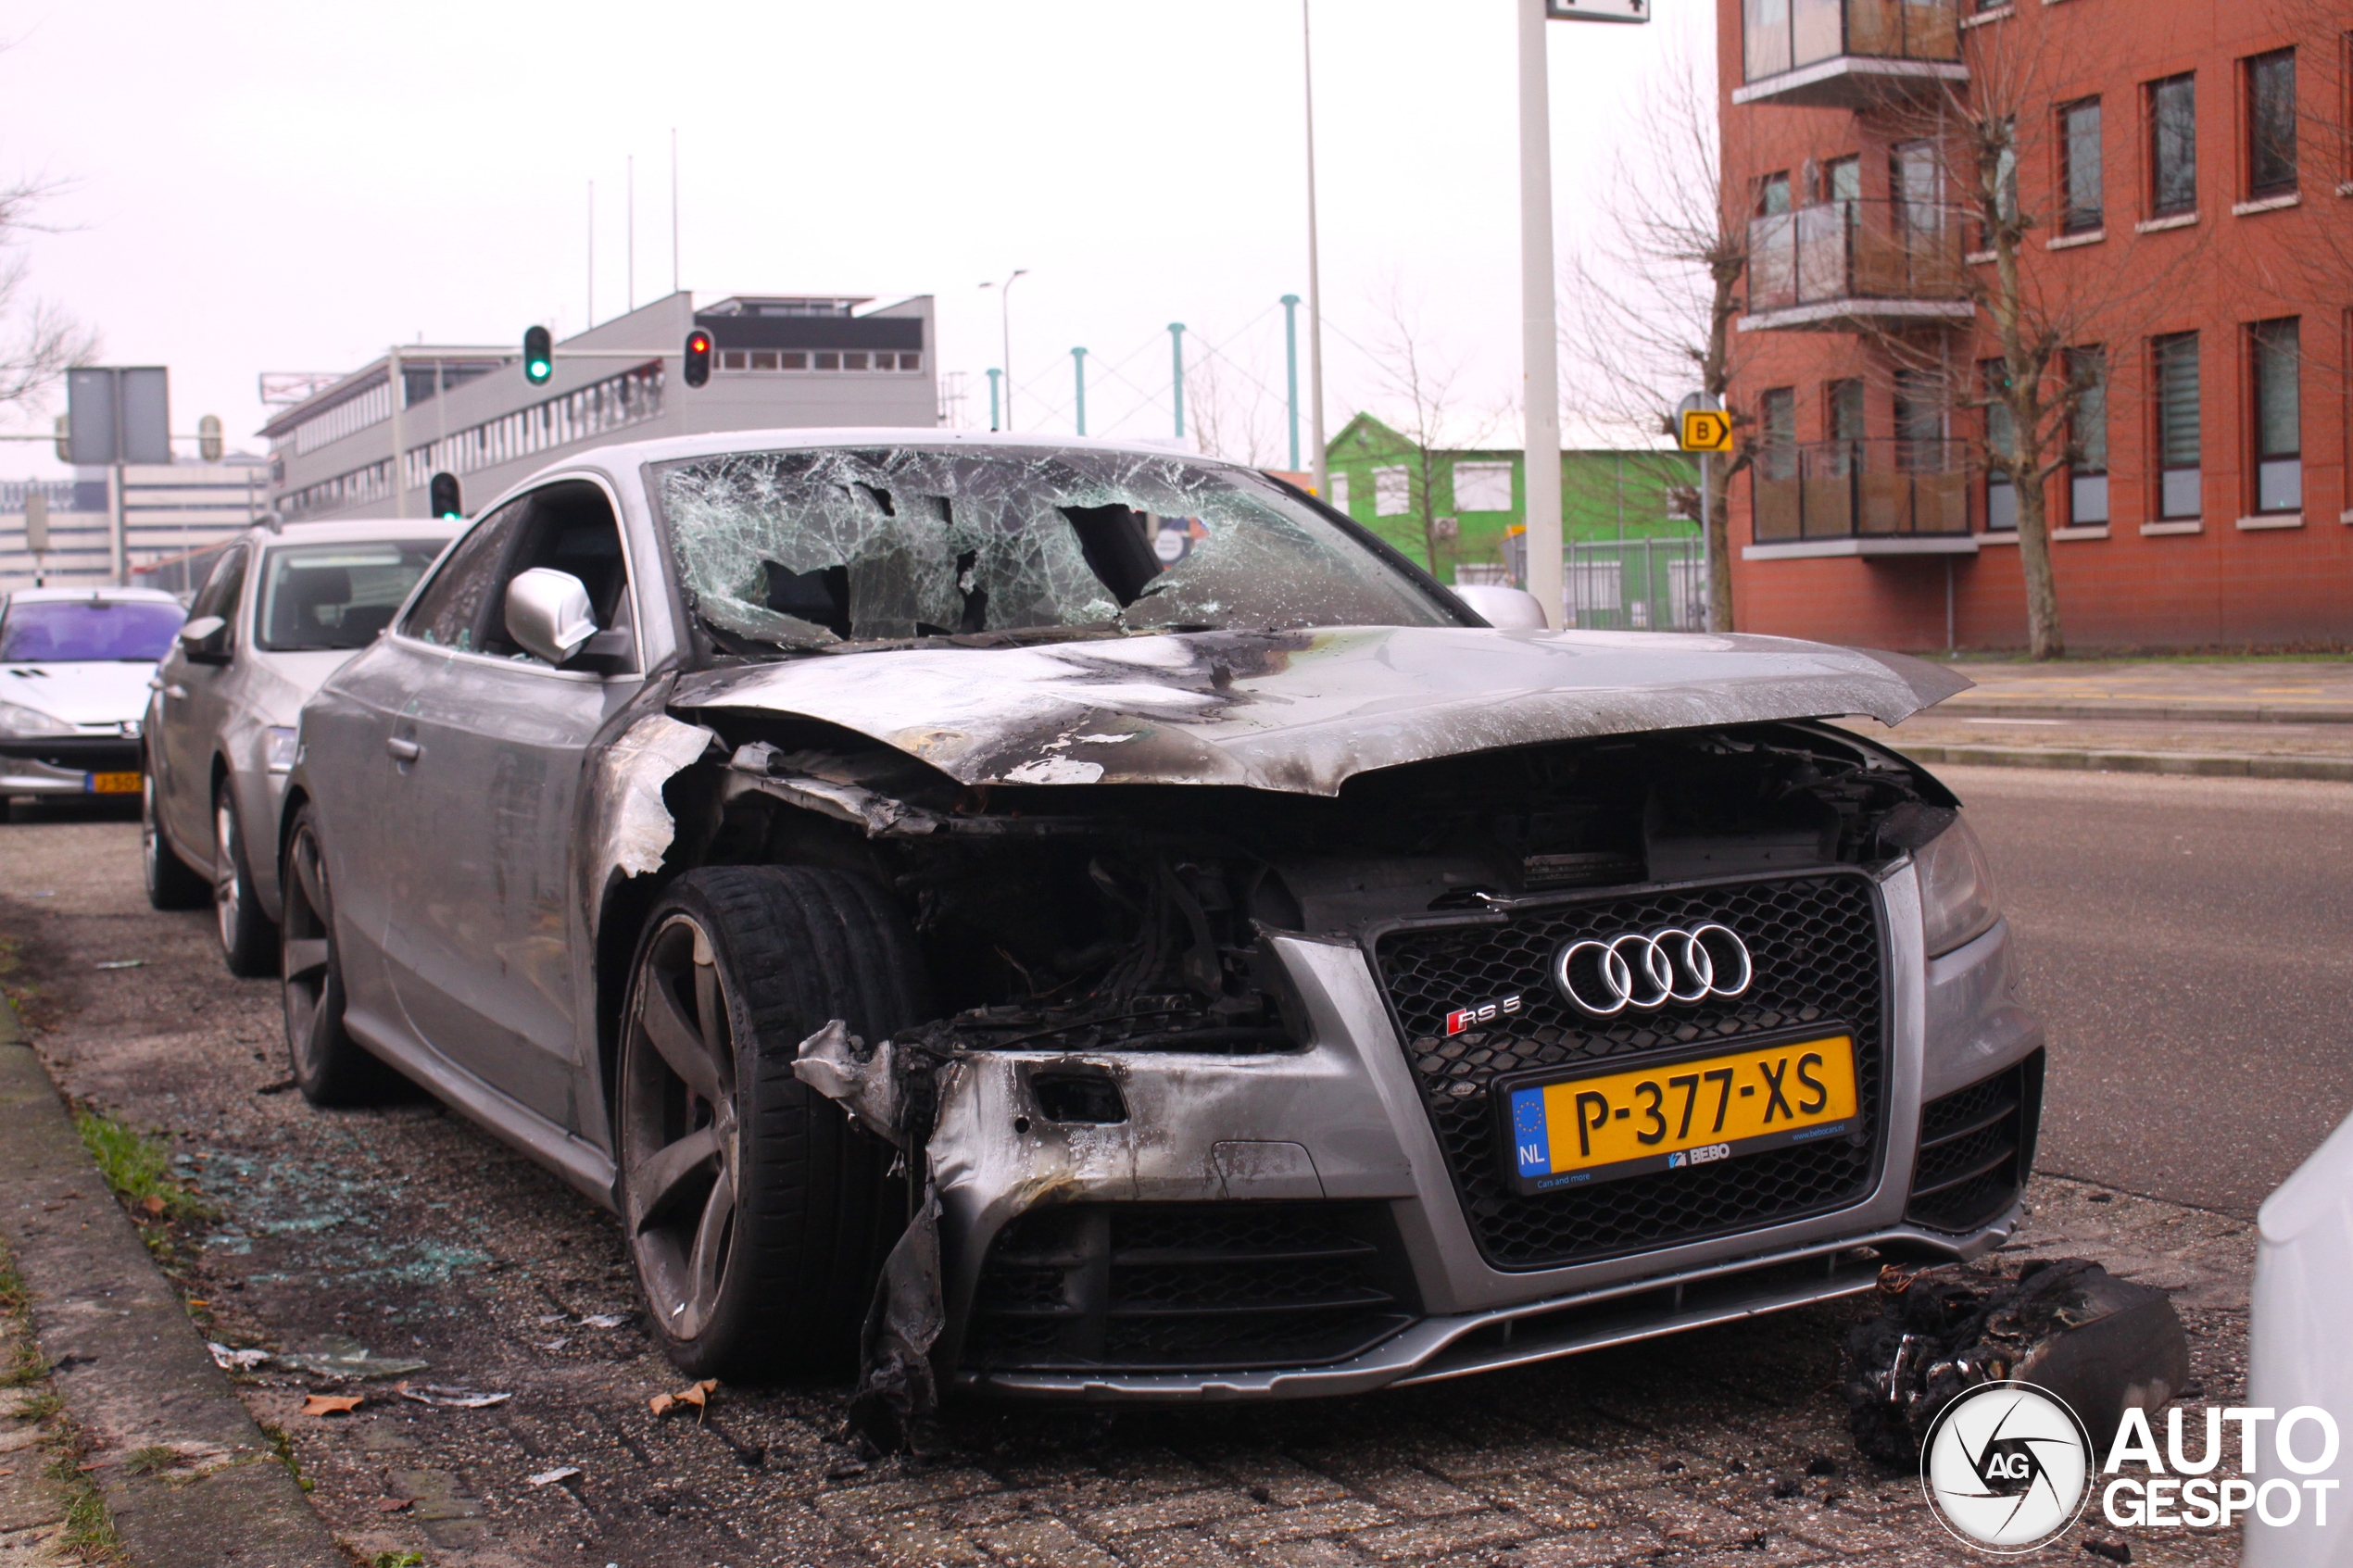 Audi RS5 burns down in Den Haag